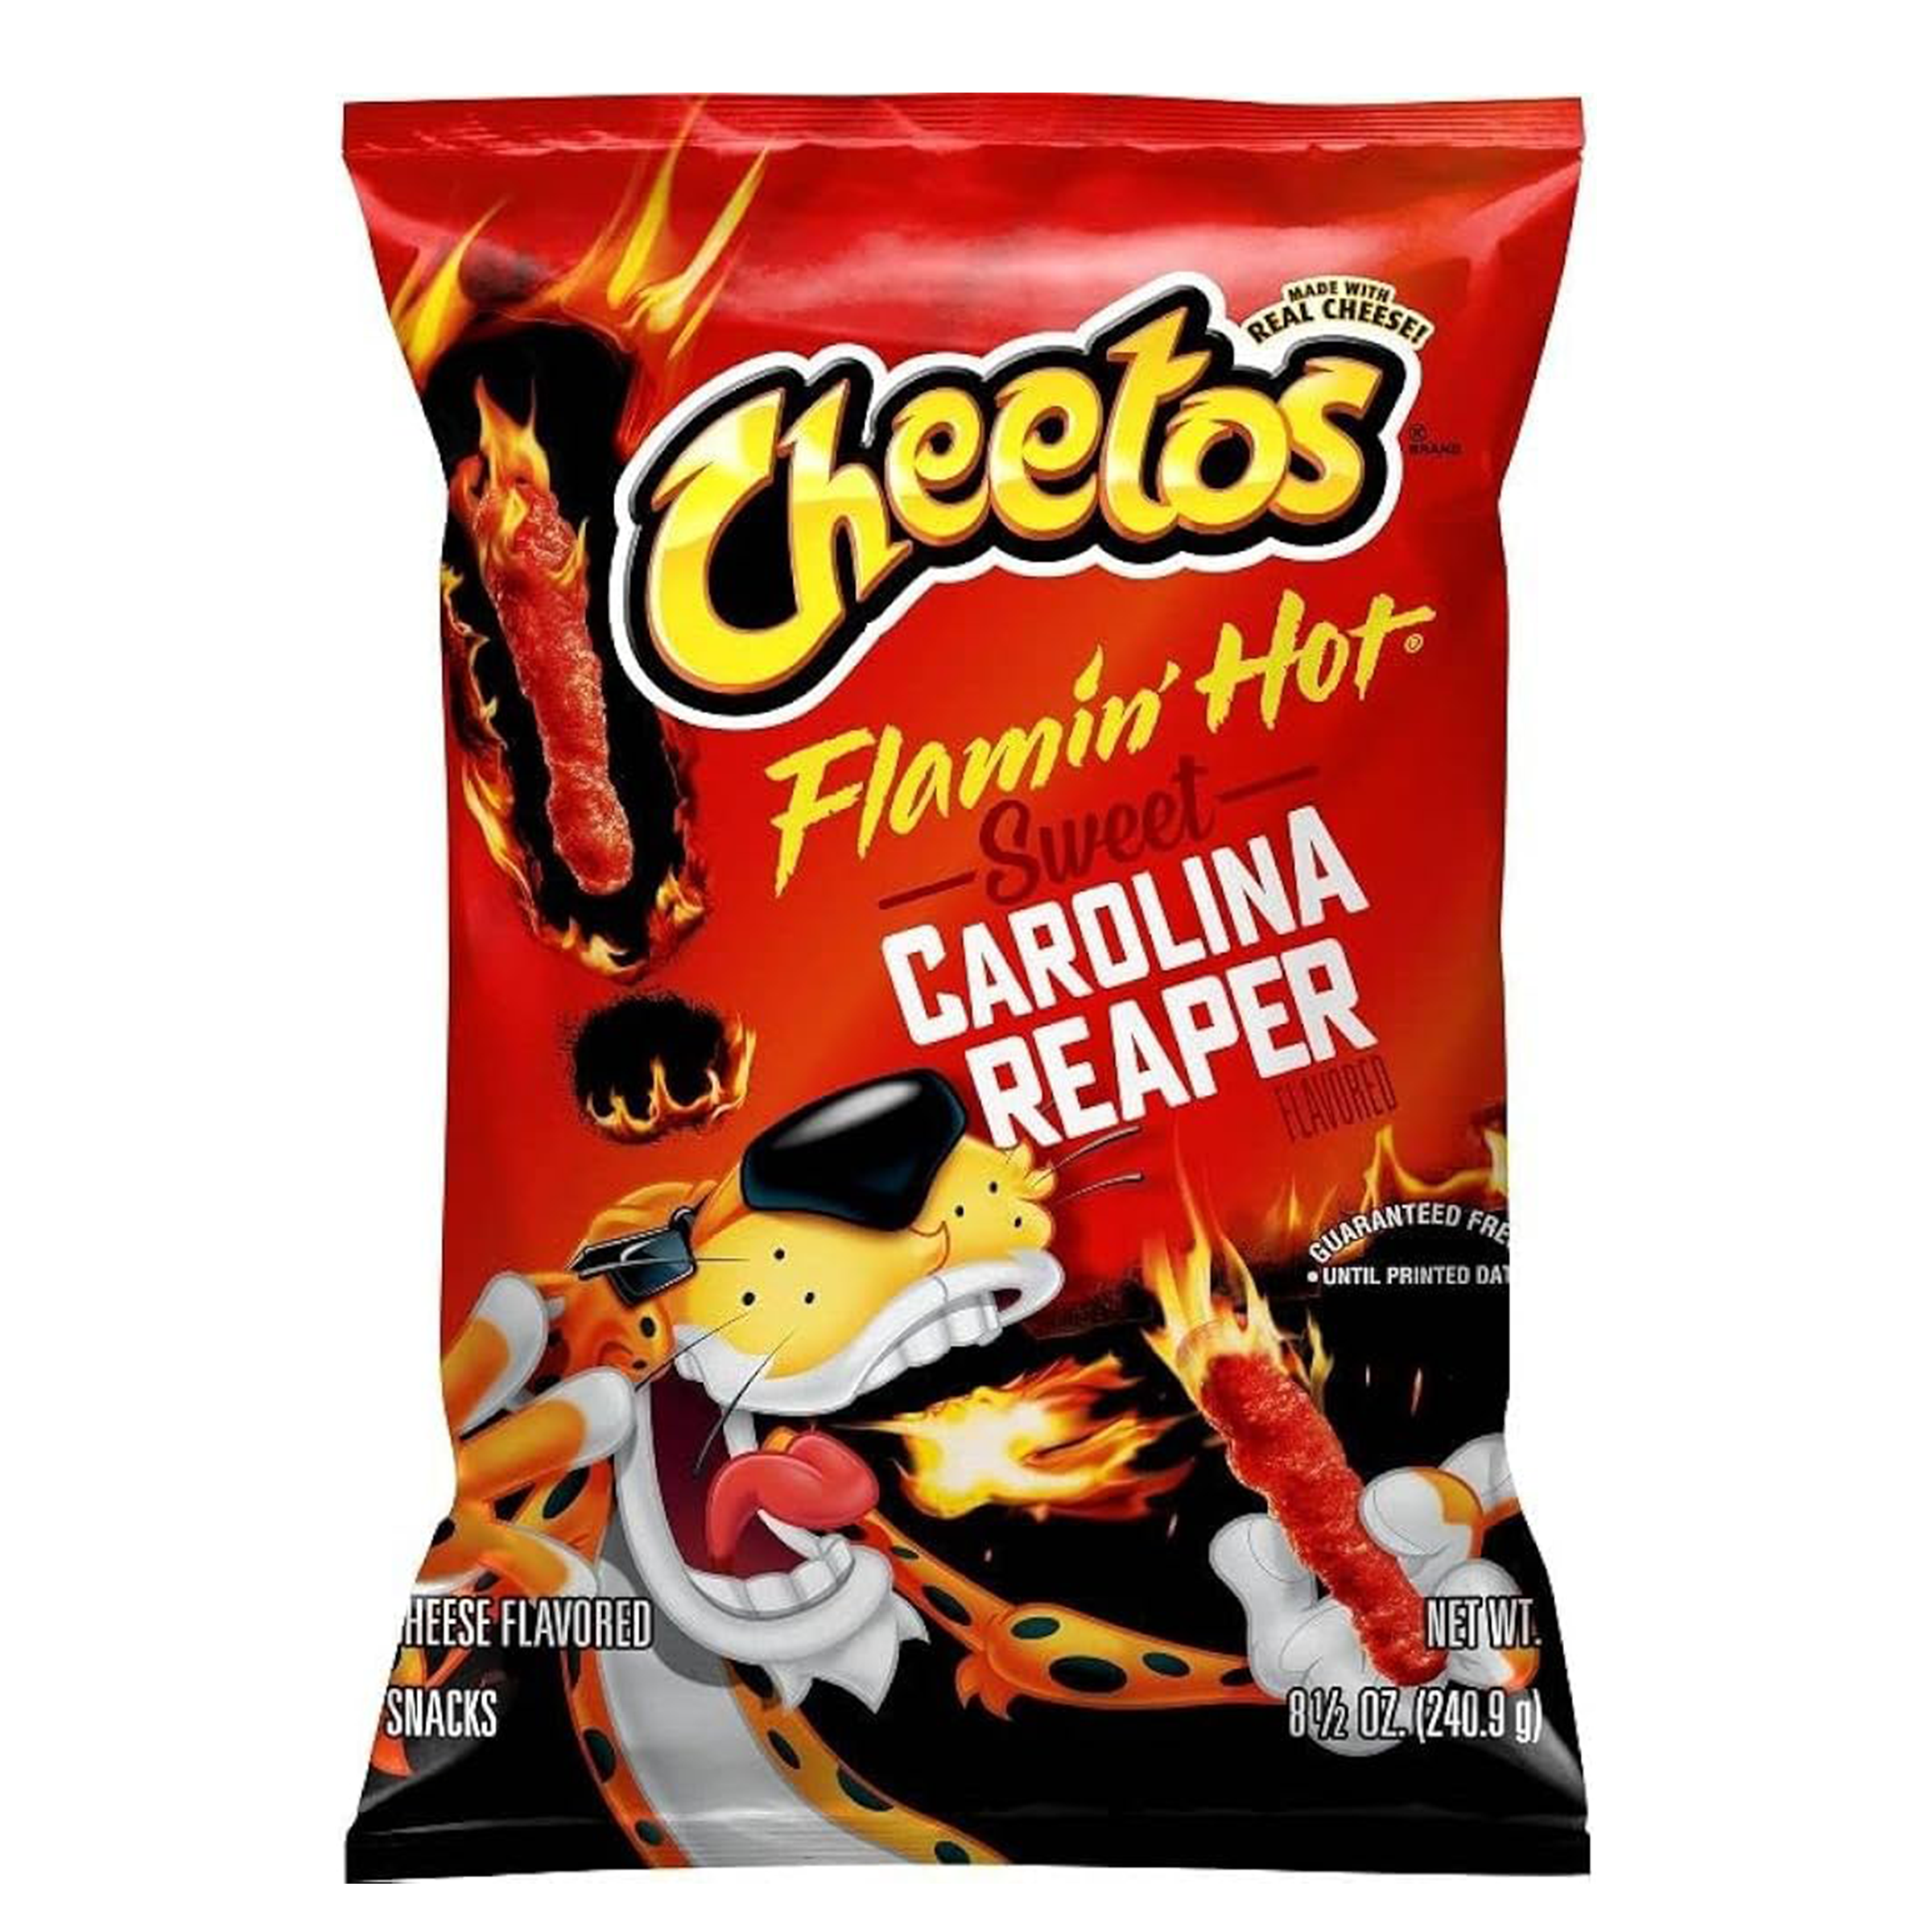 Cheetos - Flamin' Hot Sweet Carolina Reaper